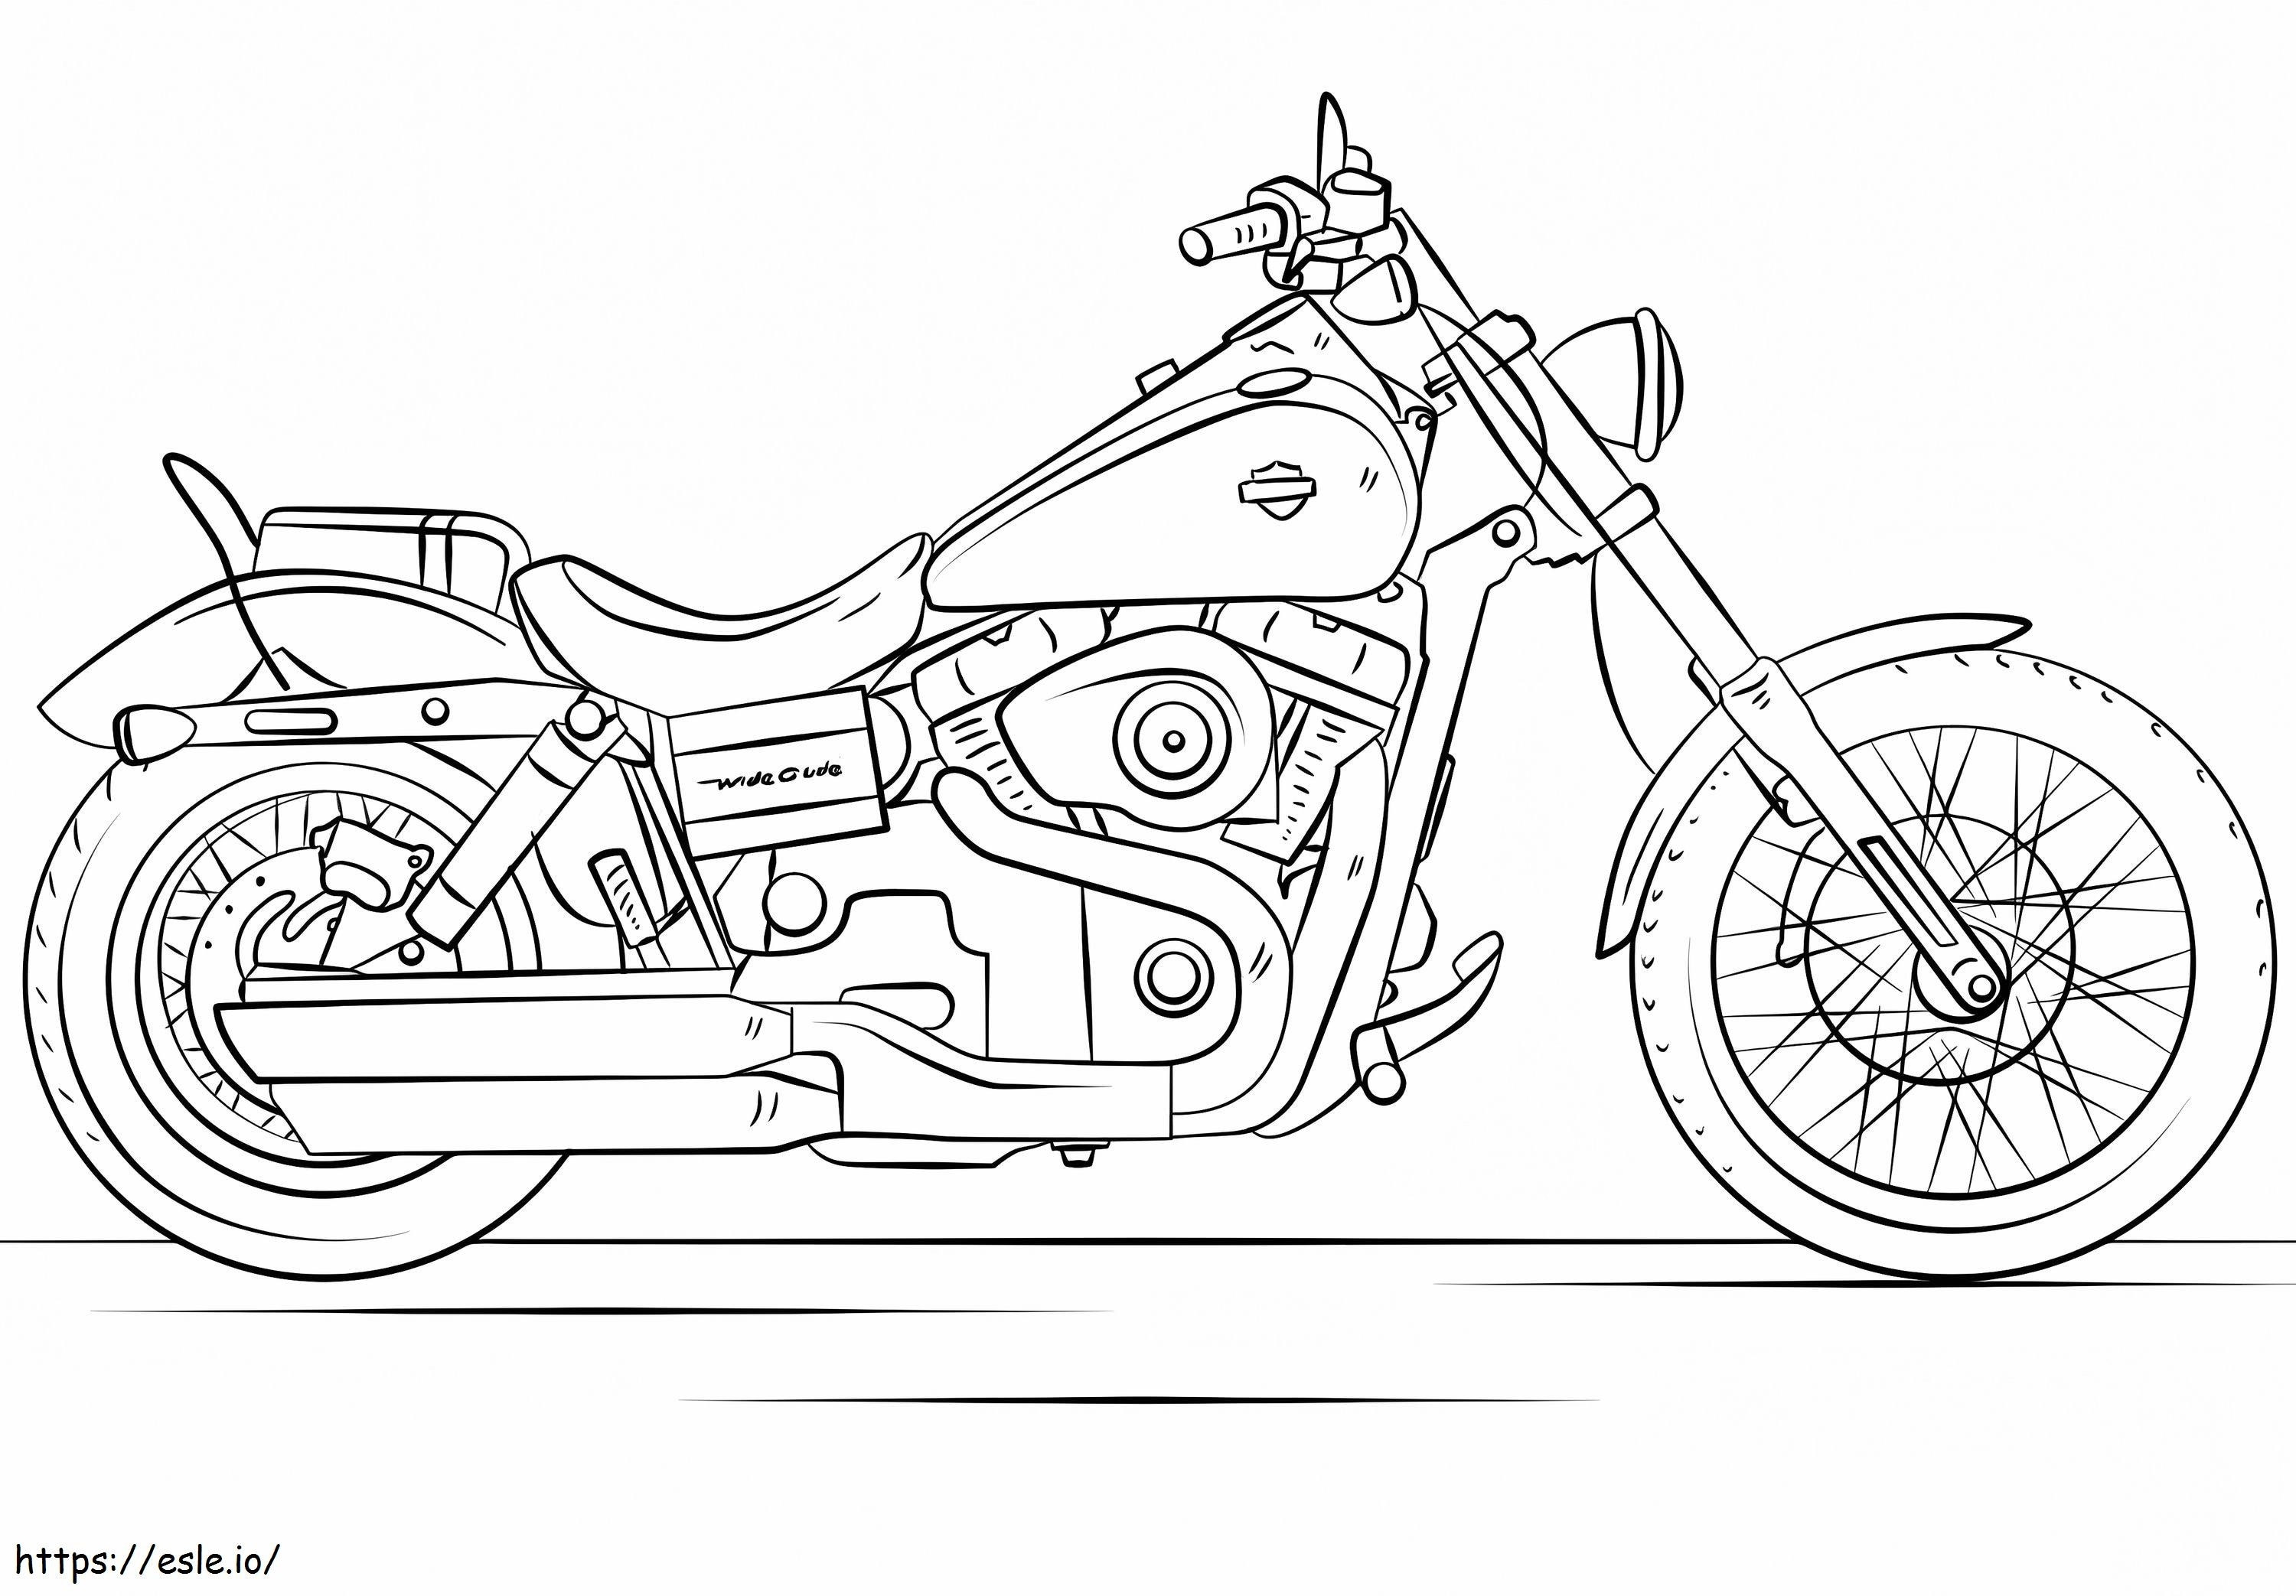 Motocicletă Harley Davidson 1024X712 de colorat